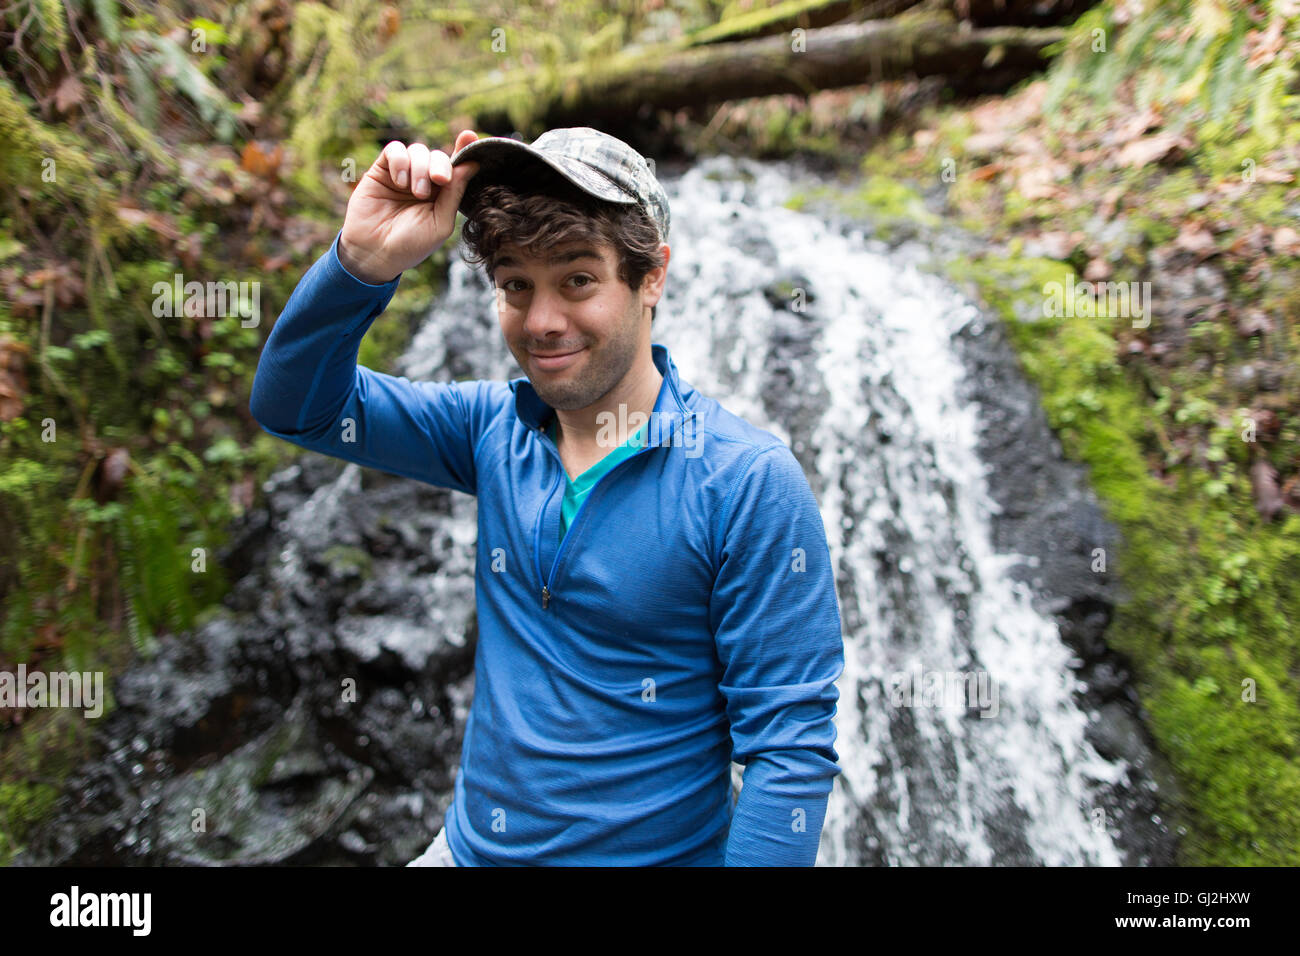 Man in front of waterfall wearing baseball cap looking at camera smiling Stock Photo